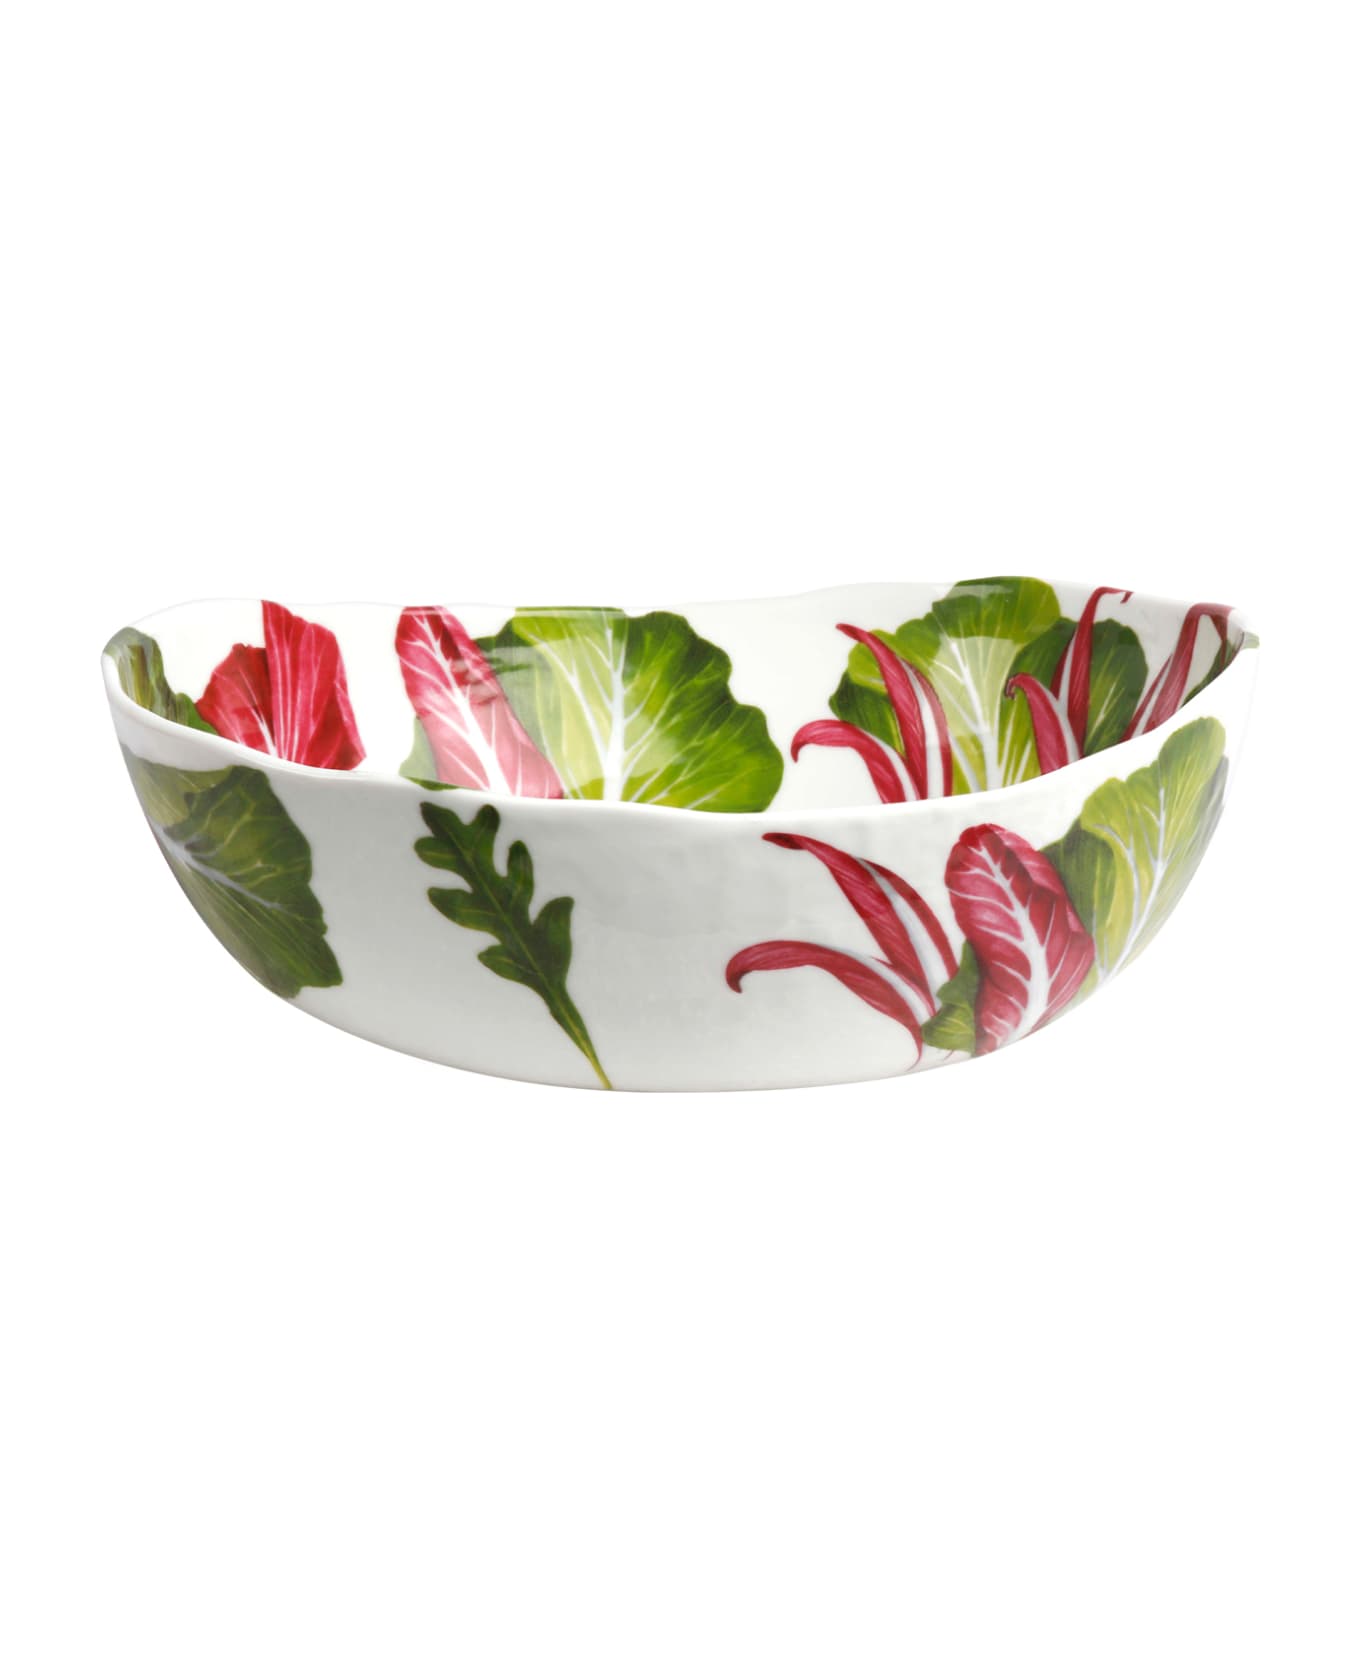 Taitù Large Oval Bowl INSALATE - Dieta Mediterranea Vegetables Collection - Multicolor